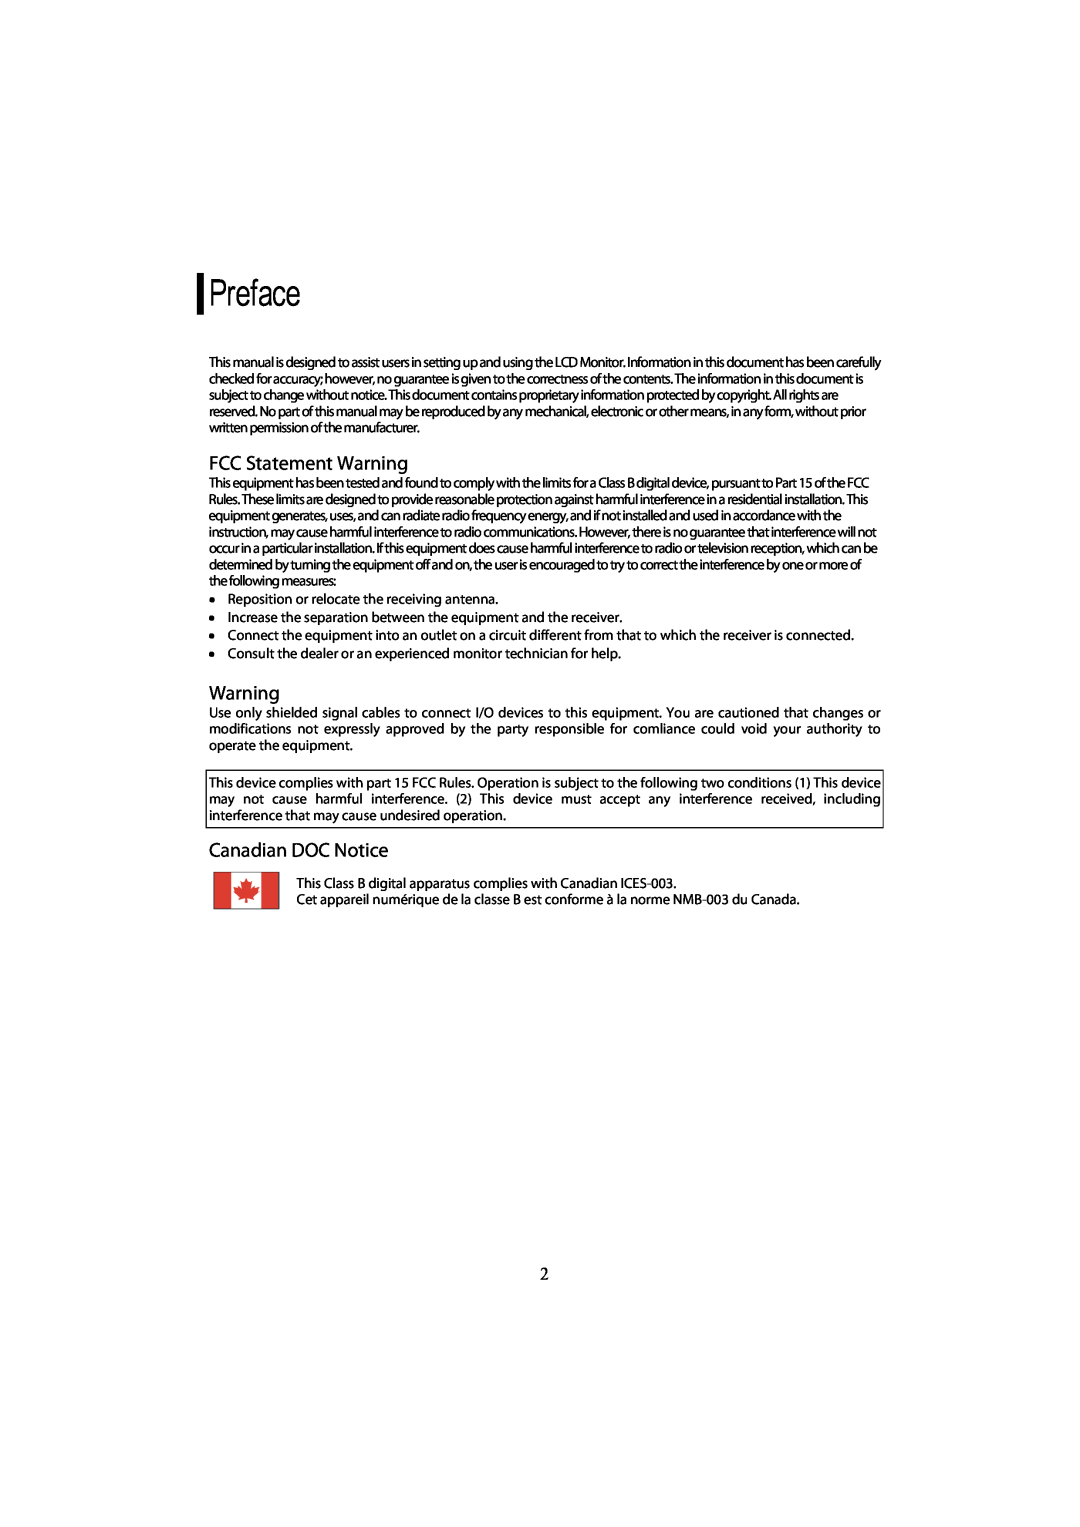 Planar PL2010MW manual Preface, FCC Statement Warning, Canadian DOC Notice 